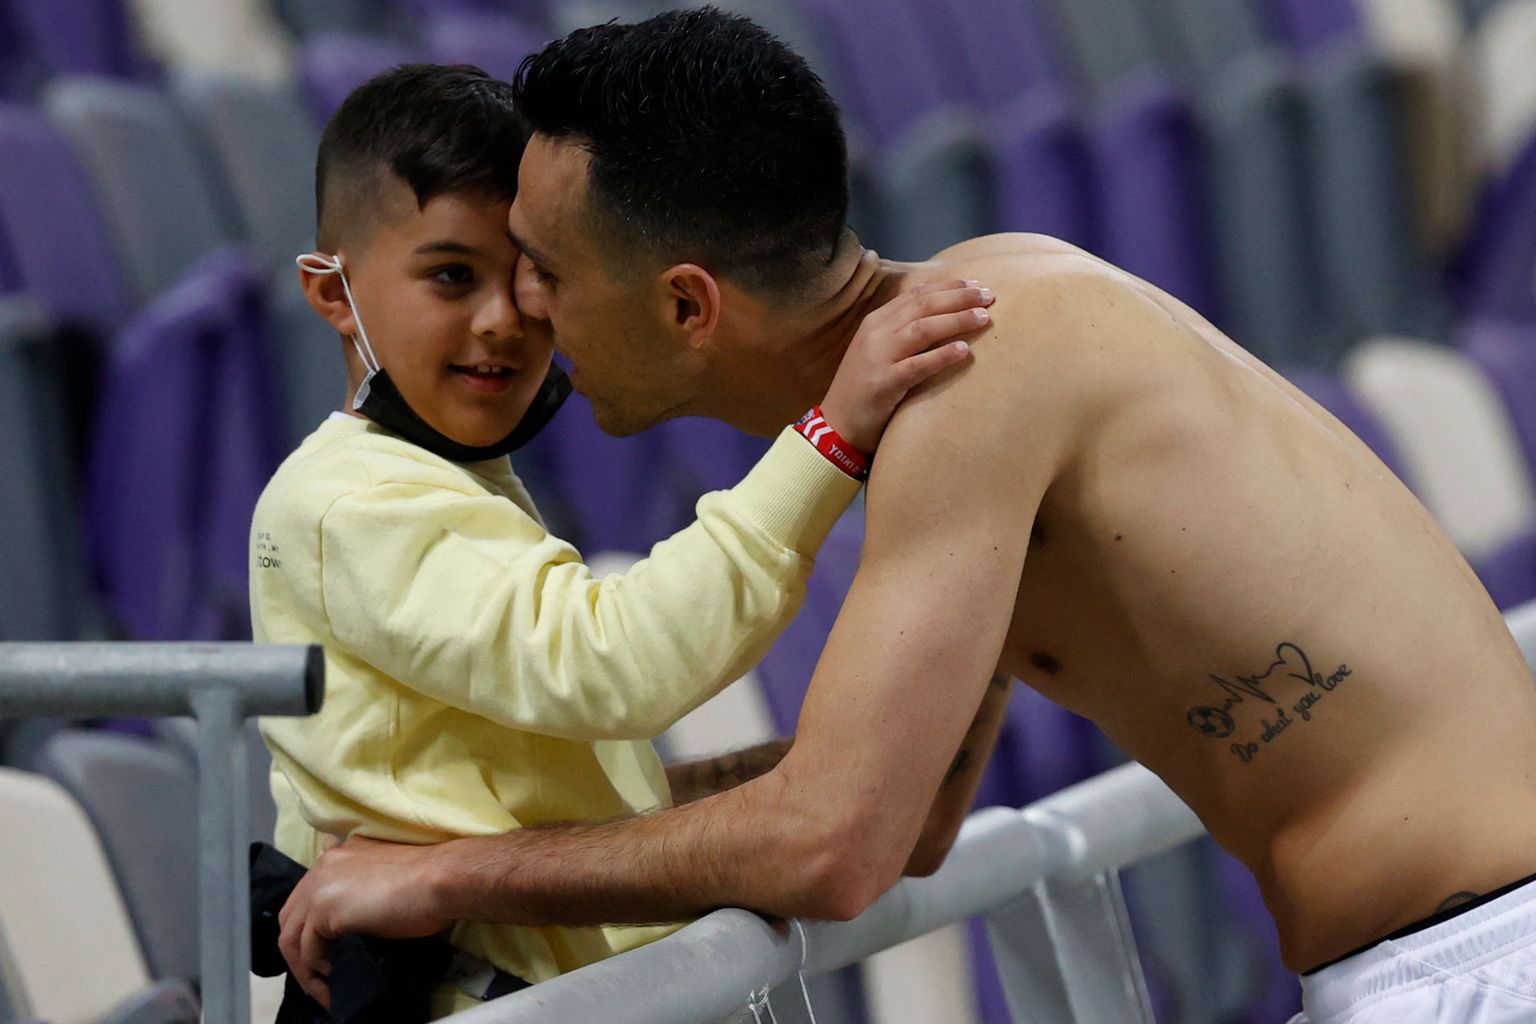 Iisraeli vutitäht Eran Zahavi kallistamas oma poega pärast matši Taaniga 25. märtsil 2021.